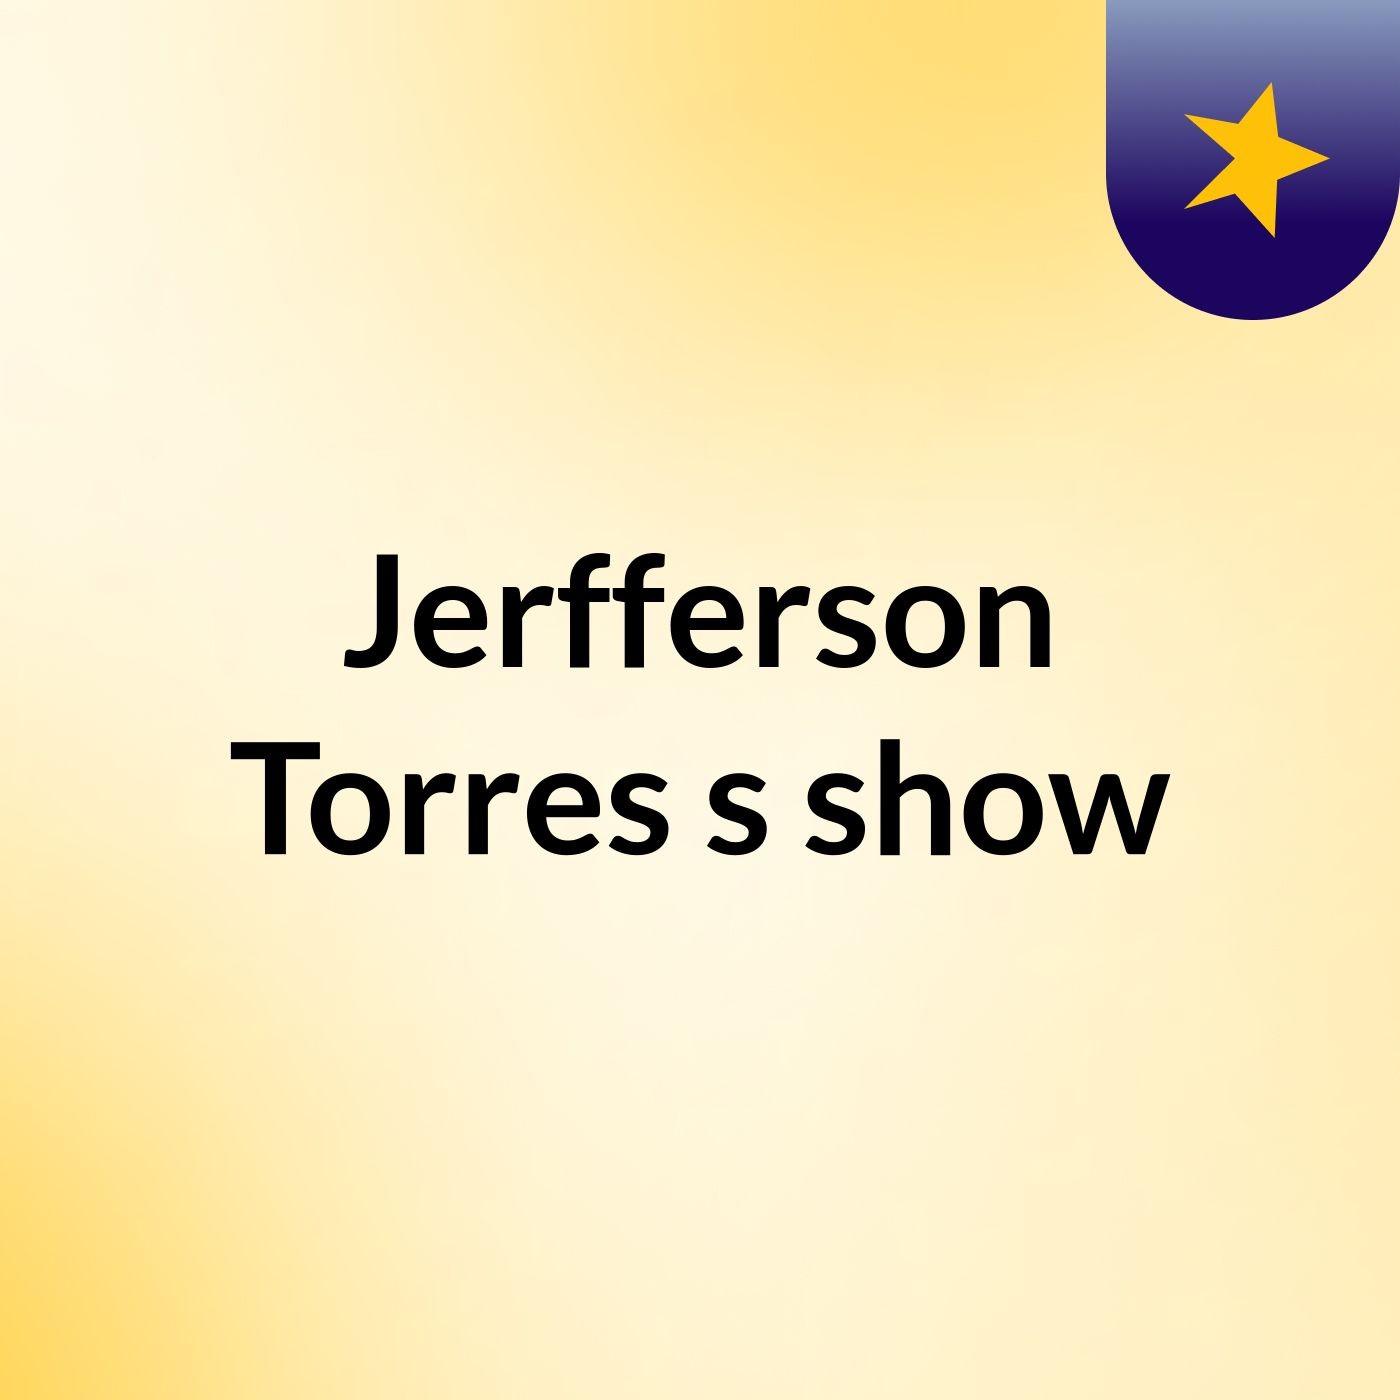 Jerfferson Torres's show